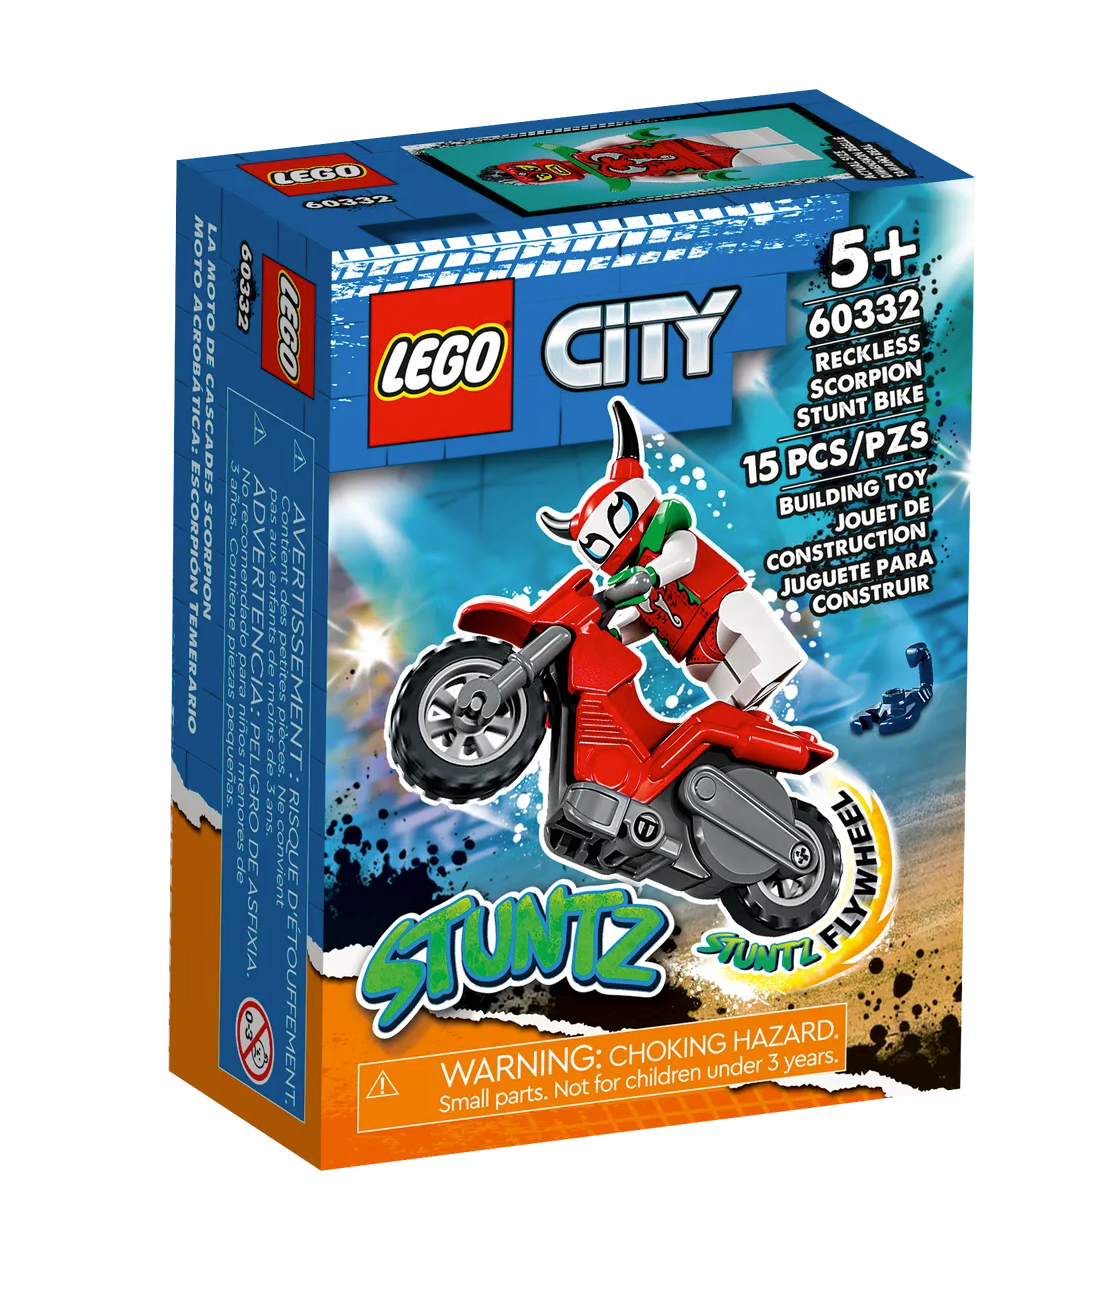 Lego Reckless Scorpion Stunt Bike